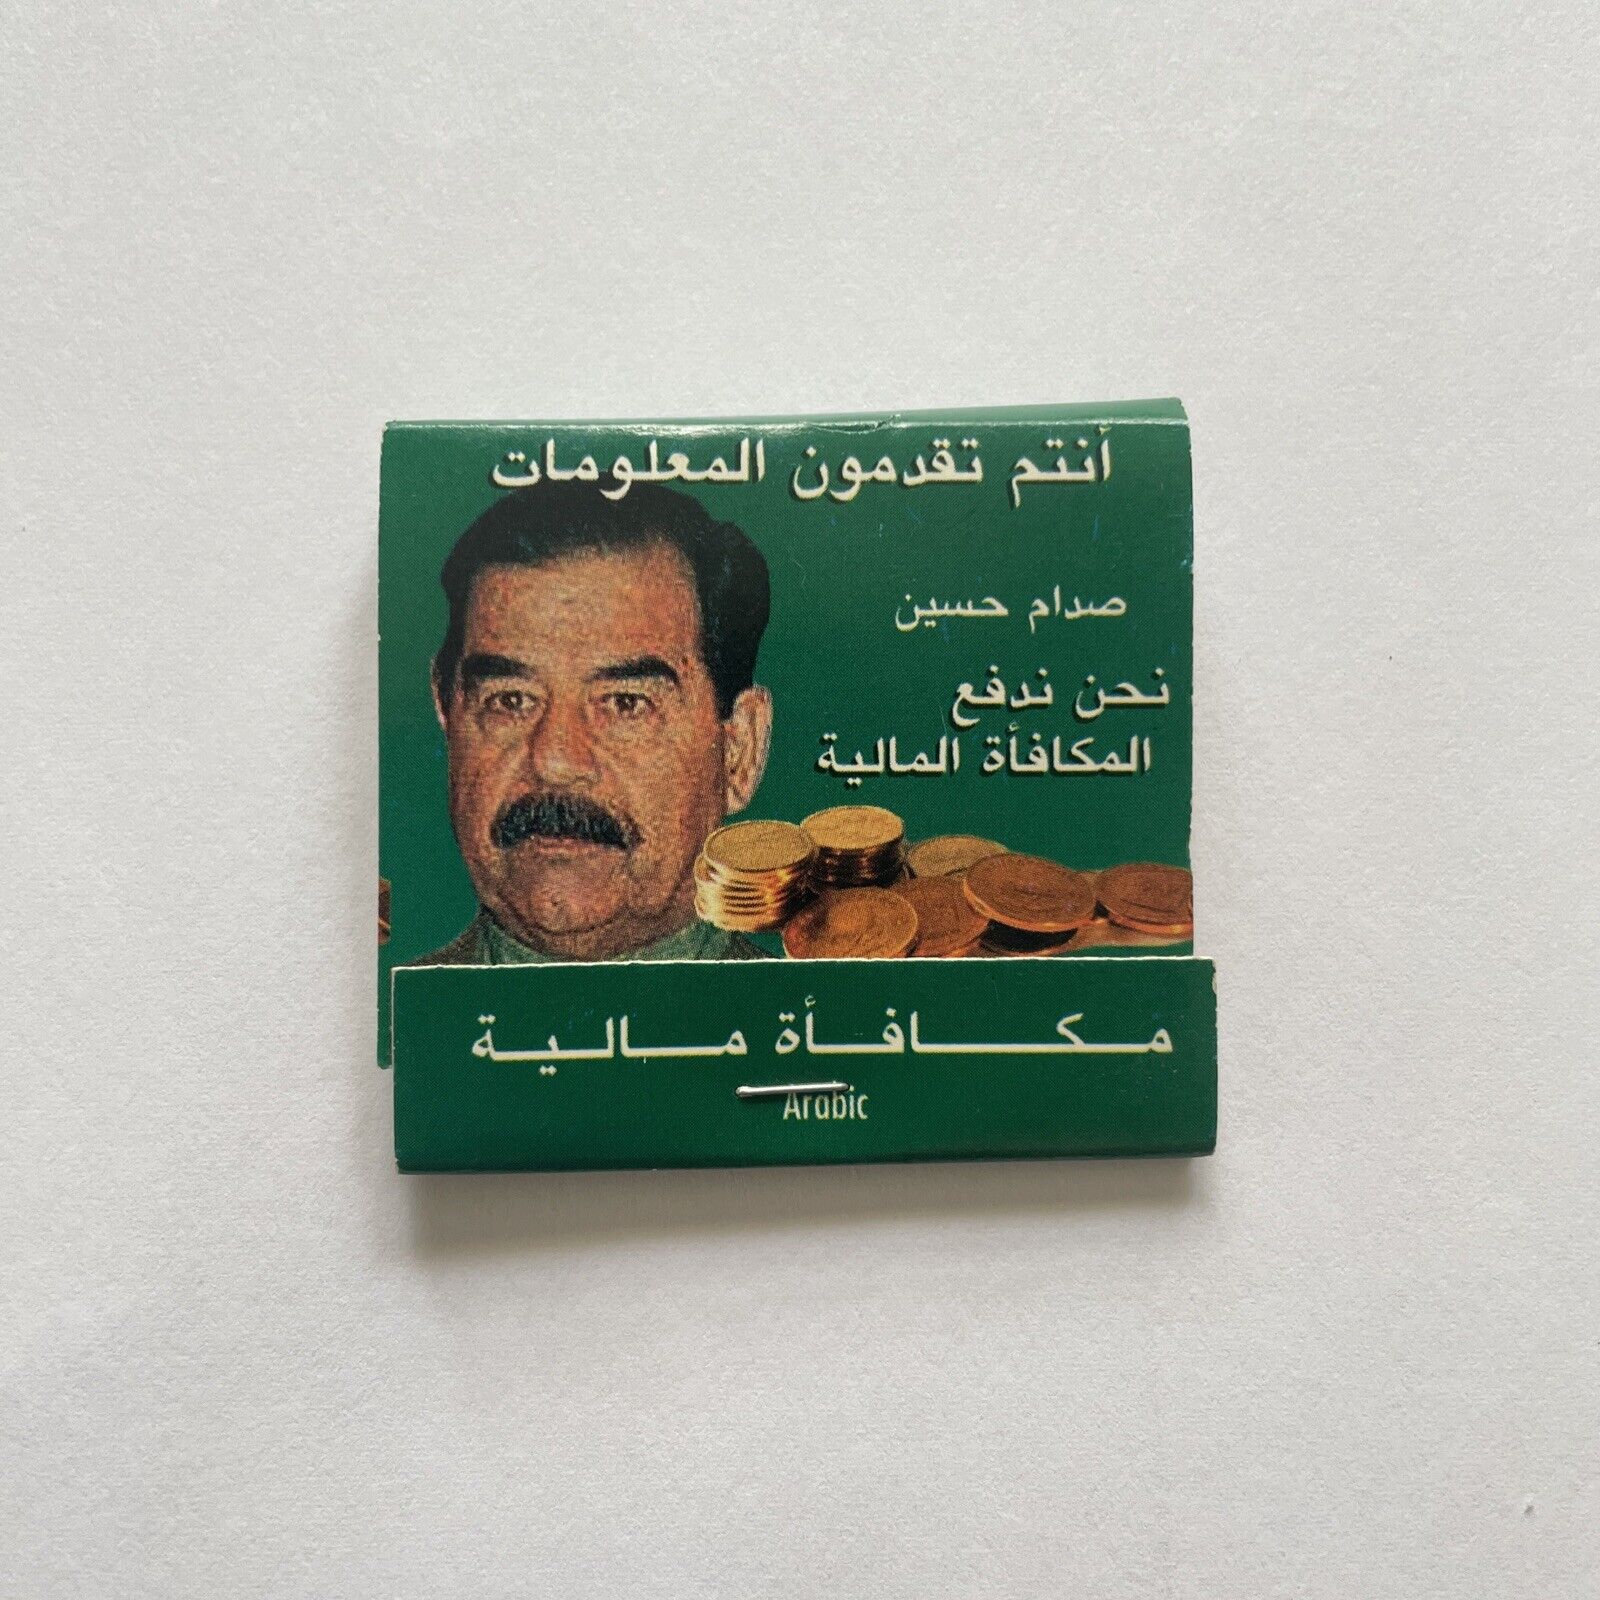 Saddam Hussein Rewards for Justice Program Matchbook w/ Arabic Information RARE